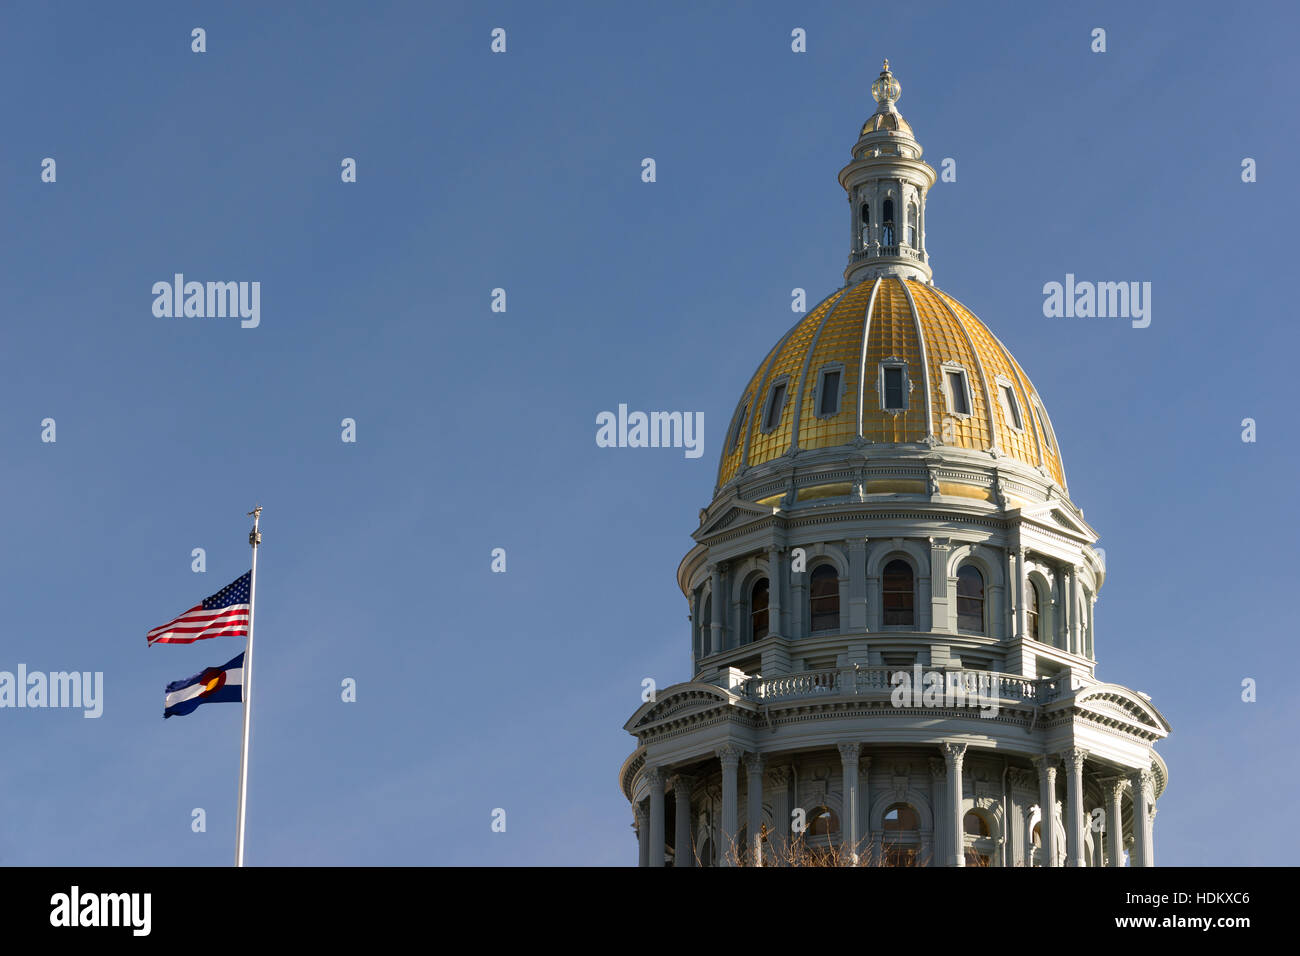 Denver Colorado Capital Building Government Dome Architecture Stock Photo